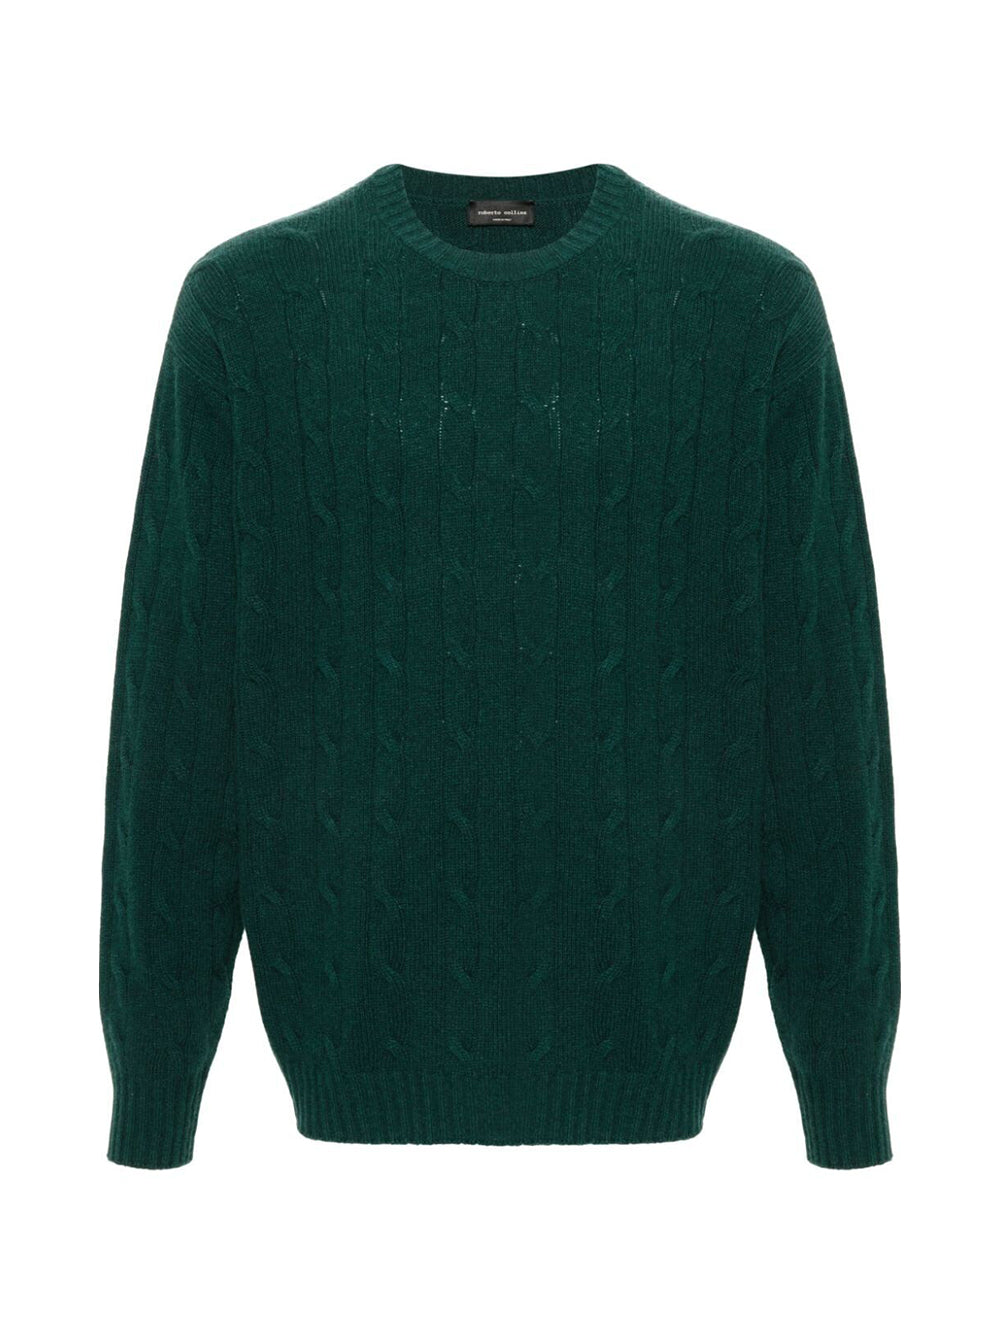 Green braid sweater